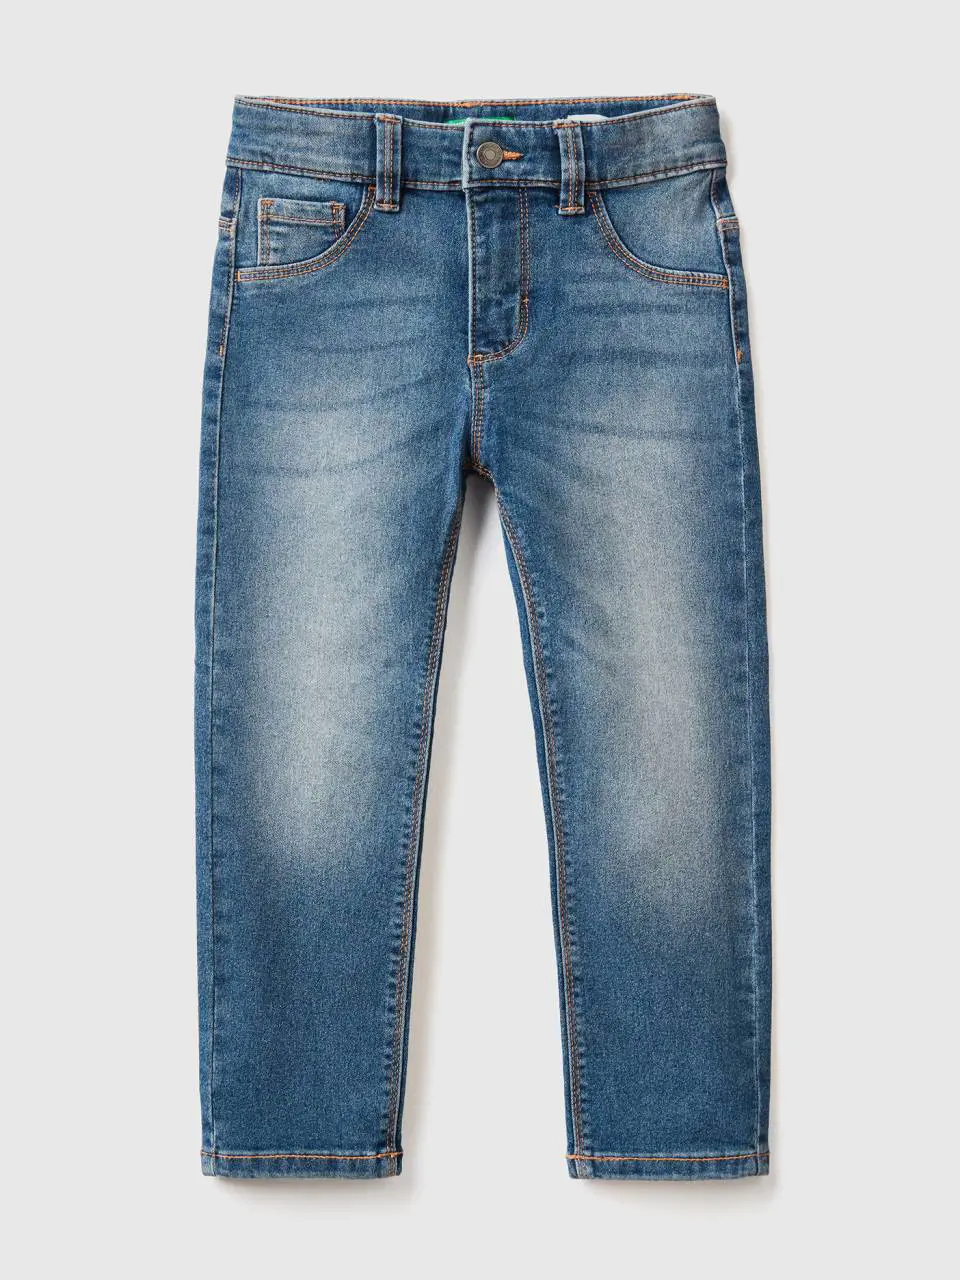 Benetton five-pocket slim fit jeans. 1